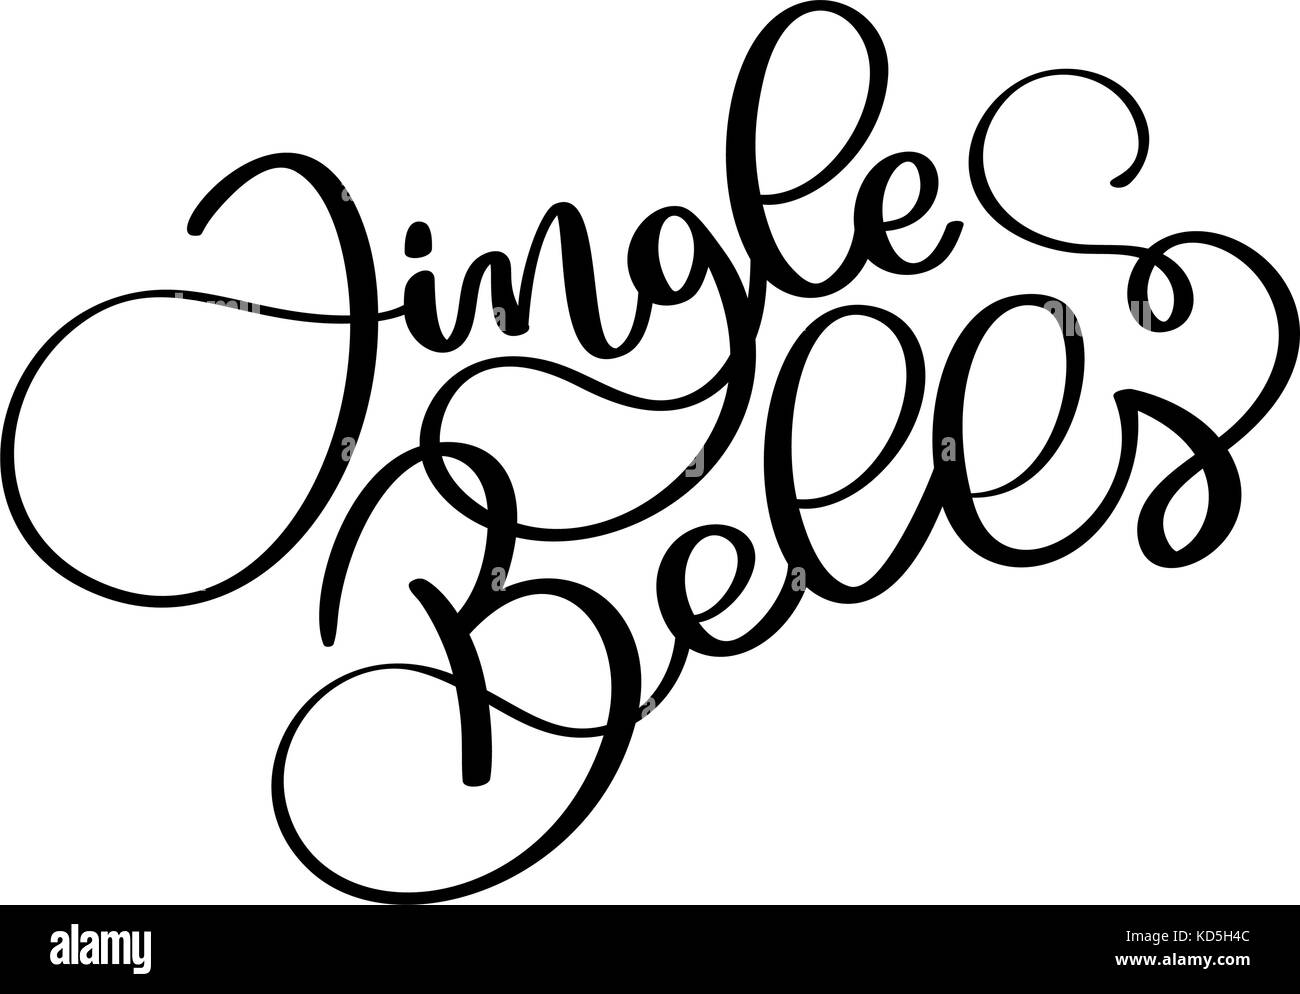 Jingle bells isolated outline Royalty Free Vector Image, jingle